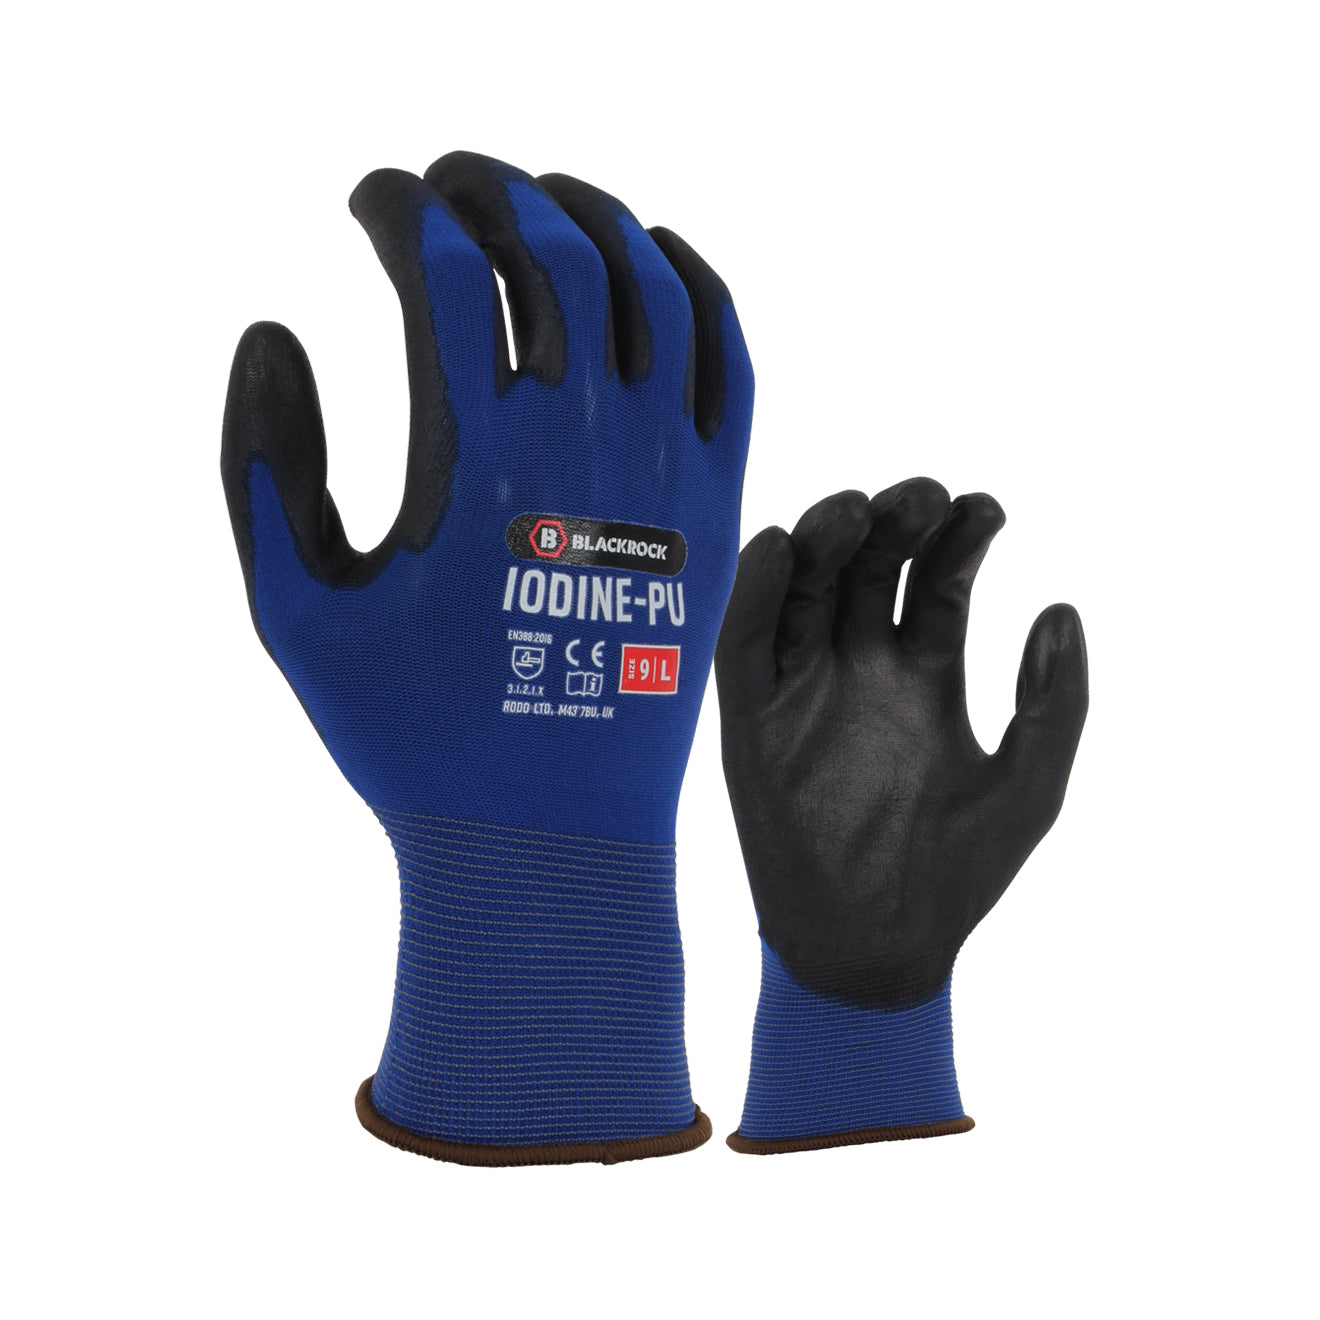 Blackrock Iodine PU Gloves Blue Main#colour_blue